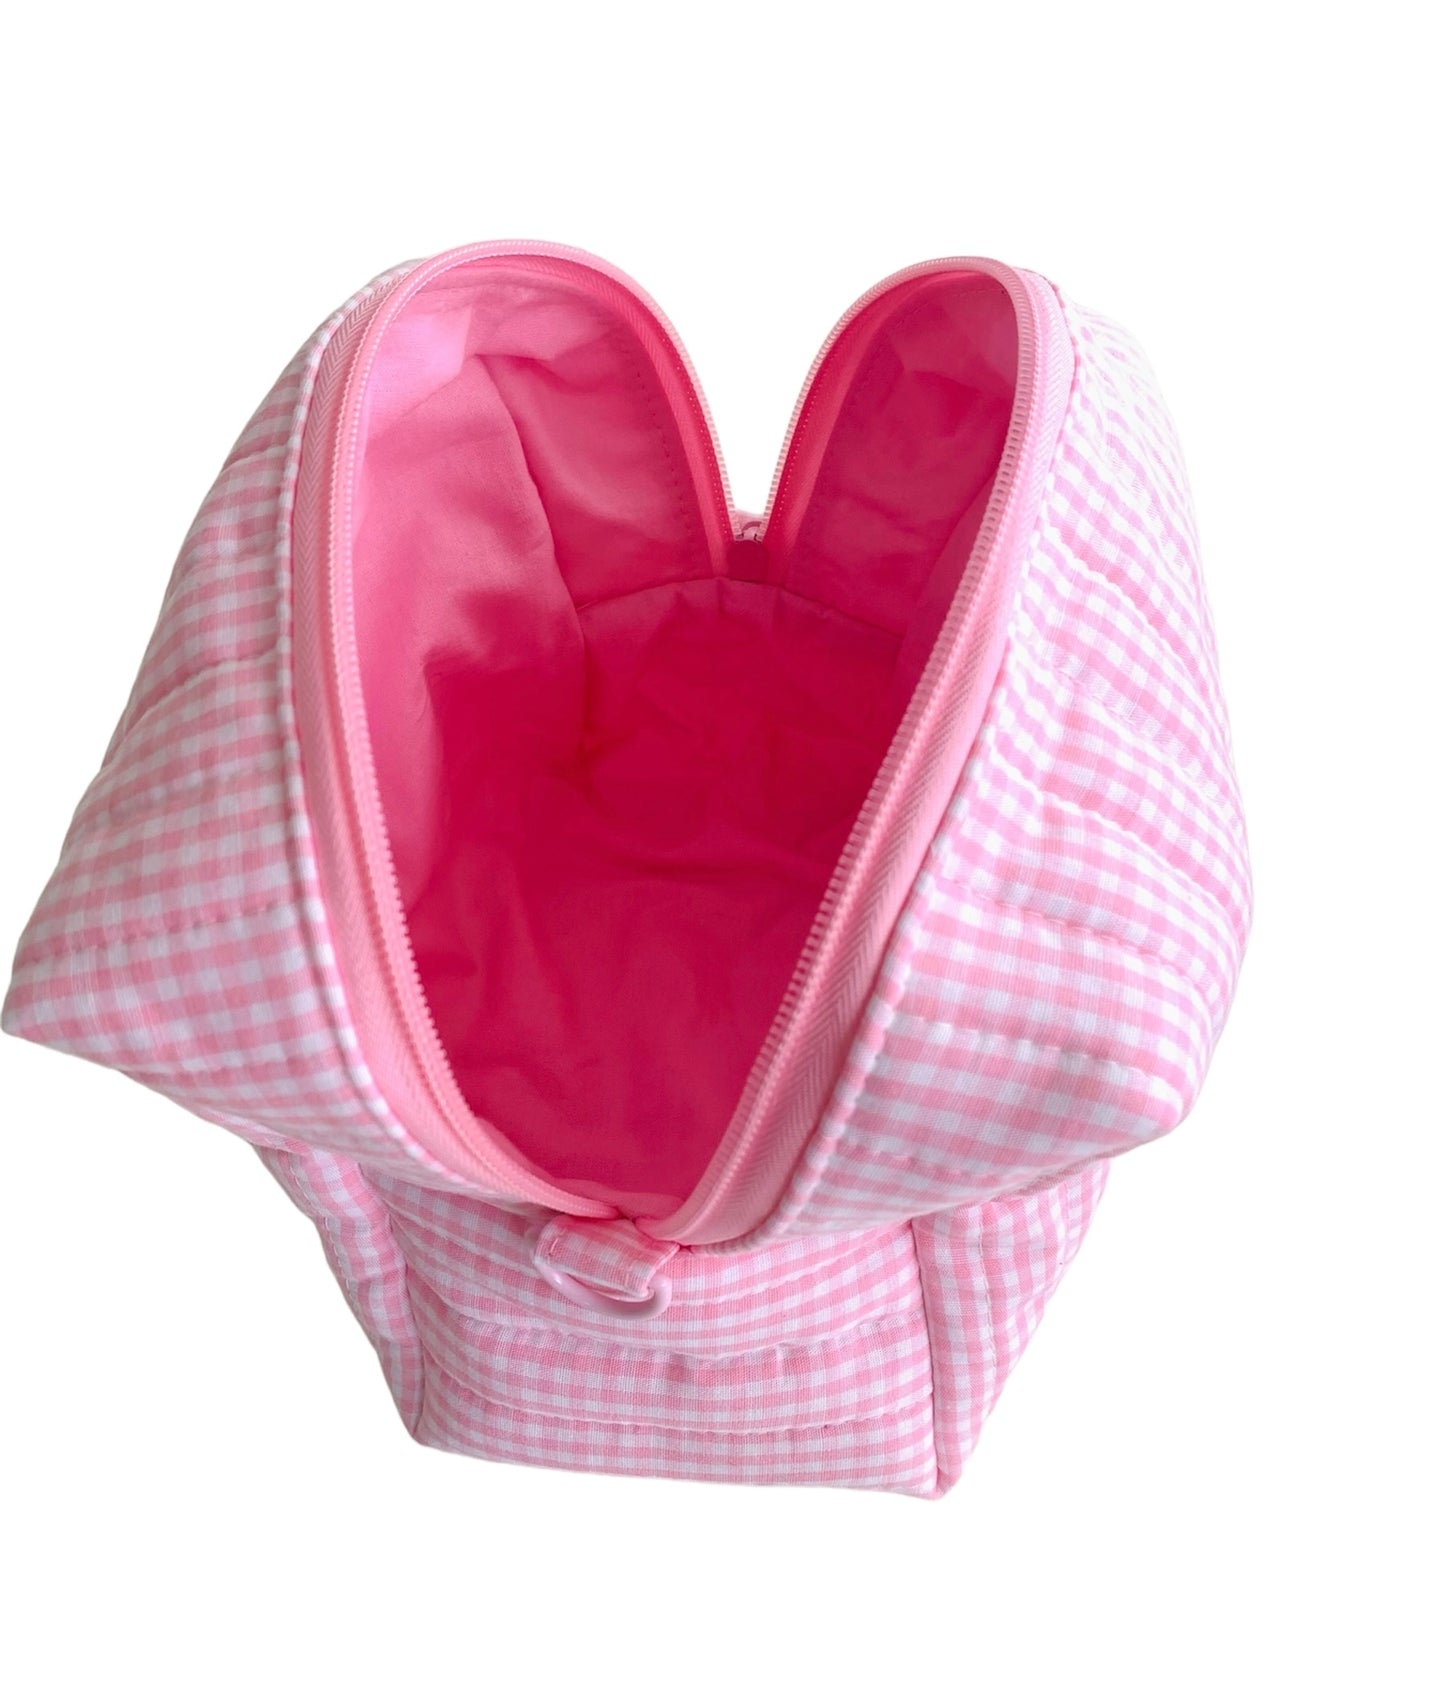 Large Pink Gingham Carry All Make Up Bag